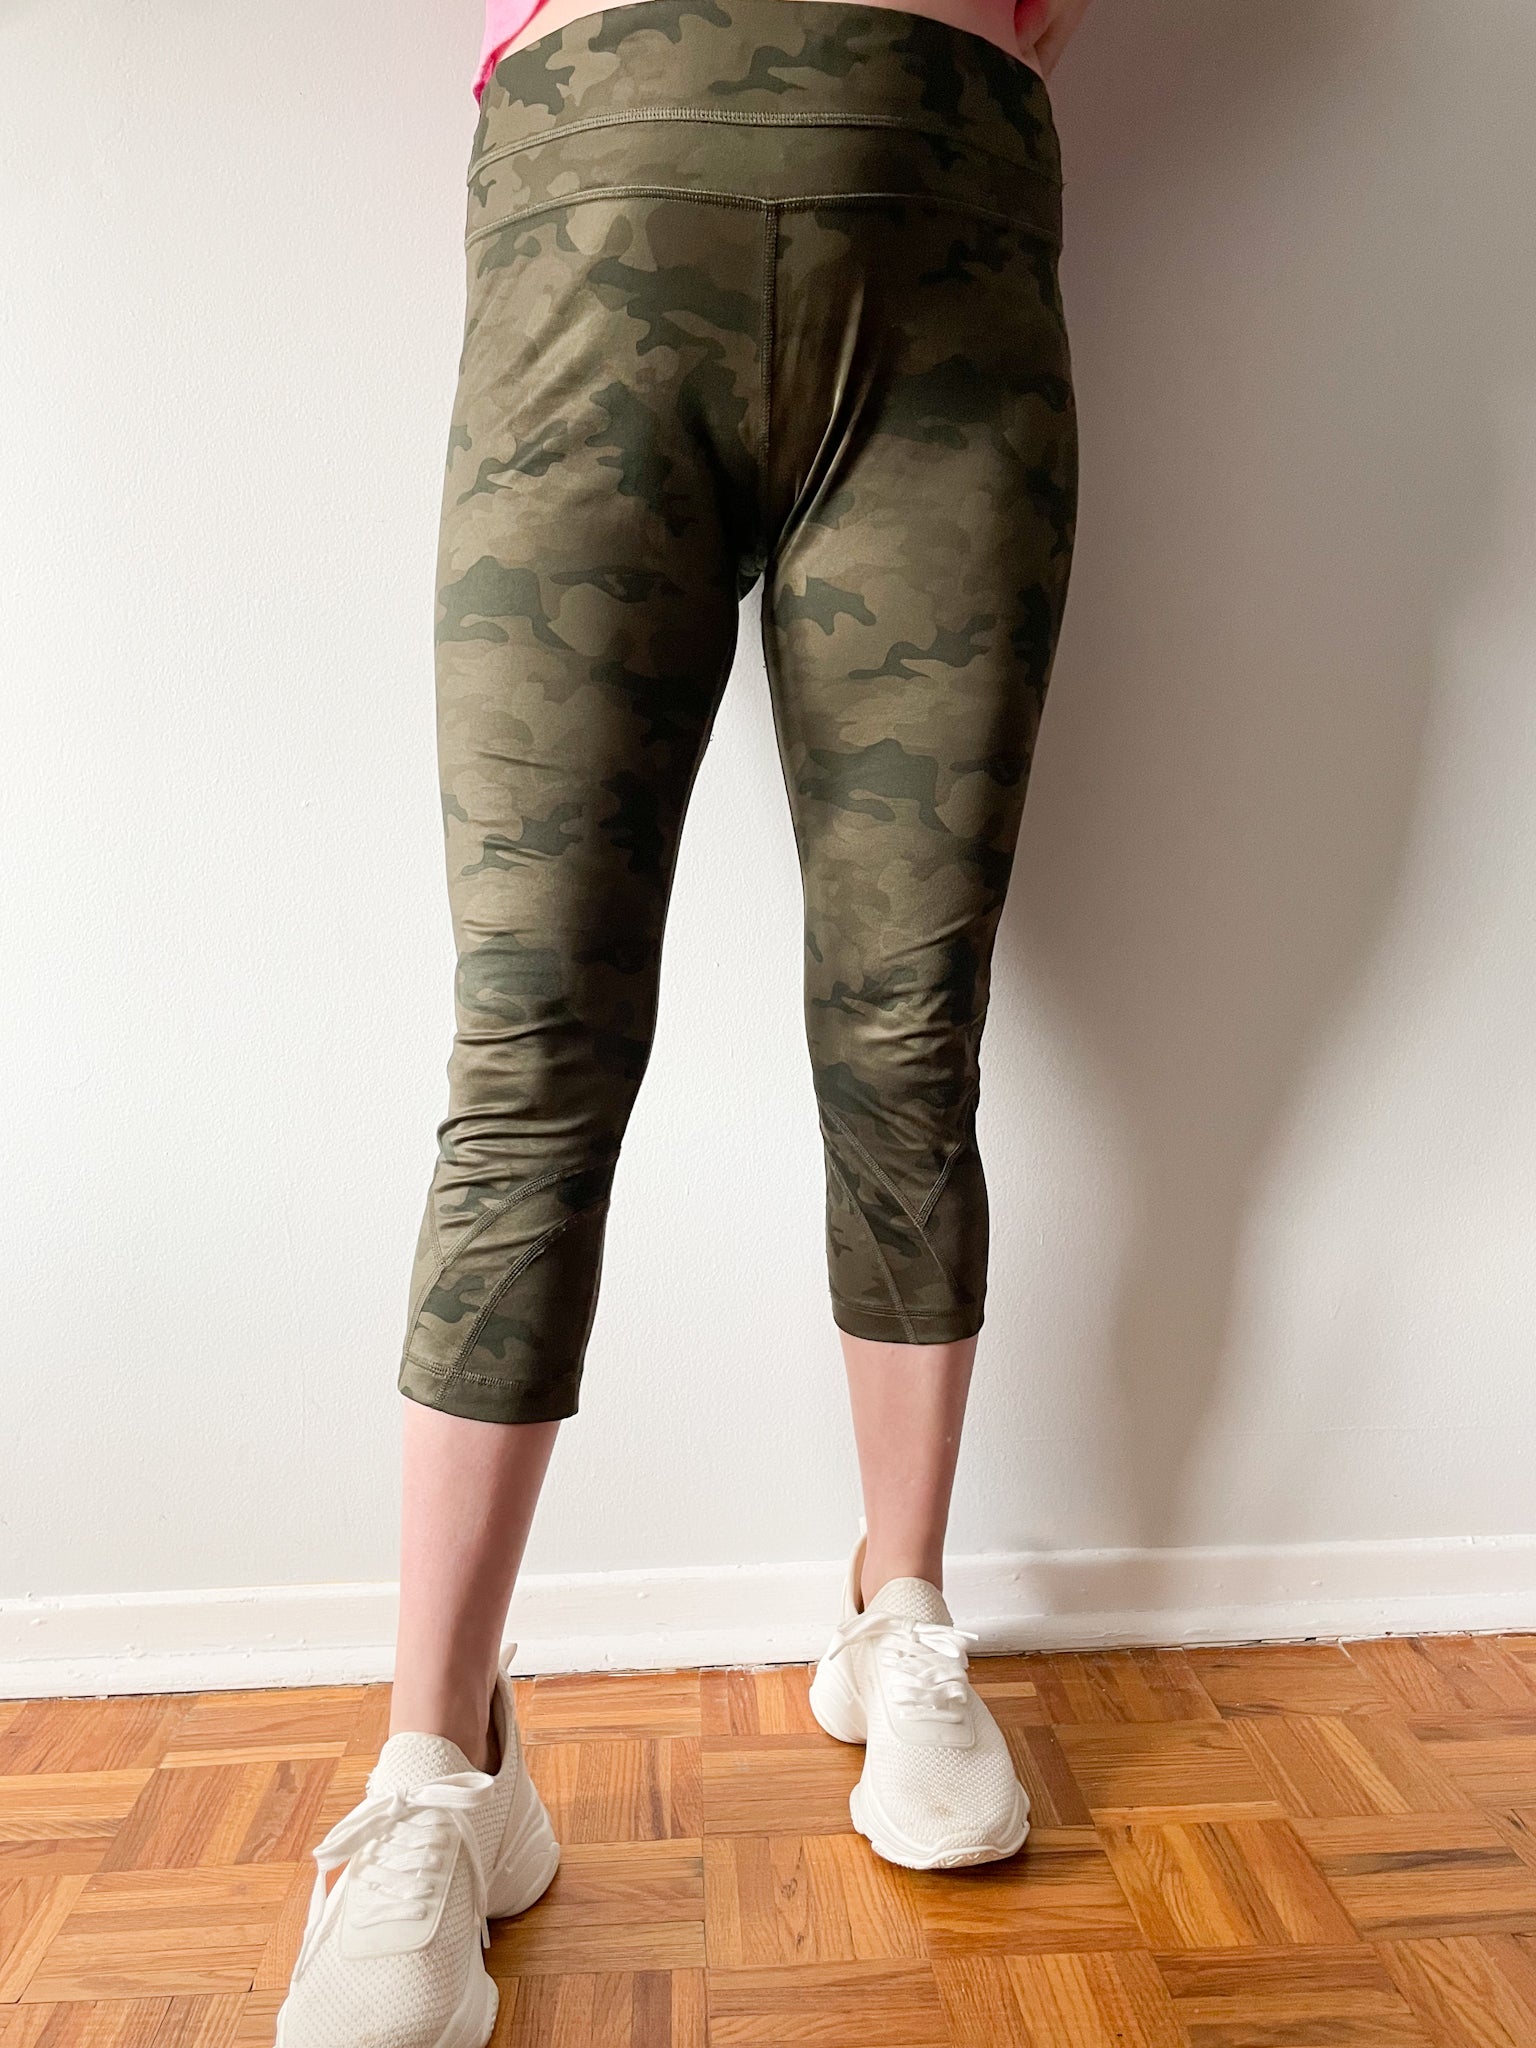 Lululemon Green Camo Cropped Legging - Size 10 – Le Prix Fashion